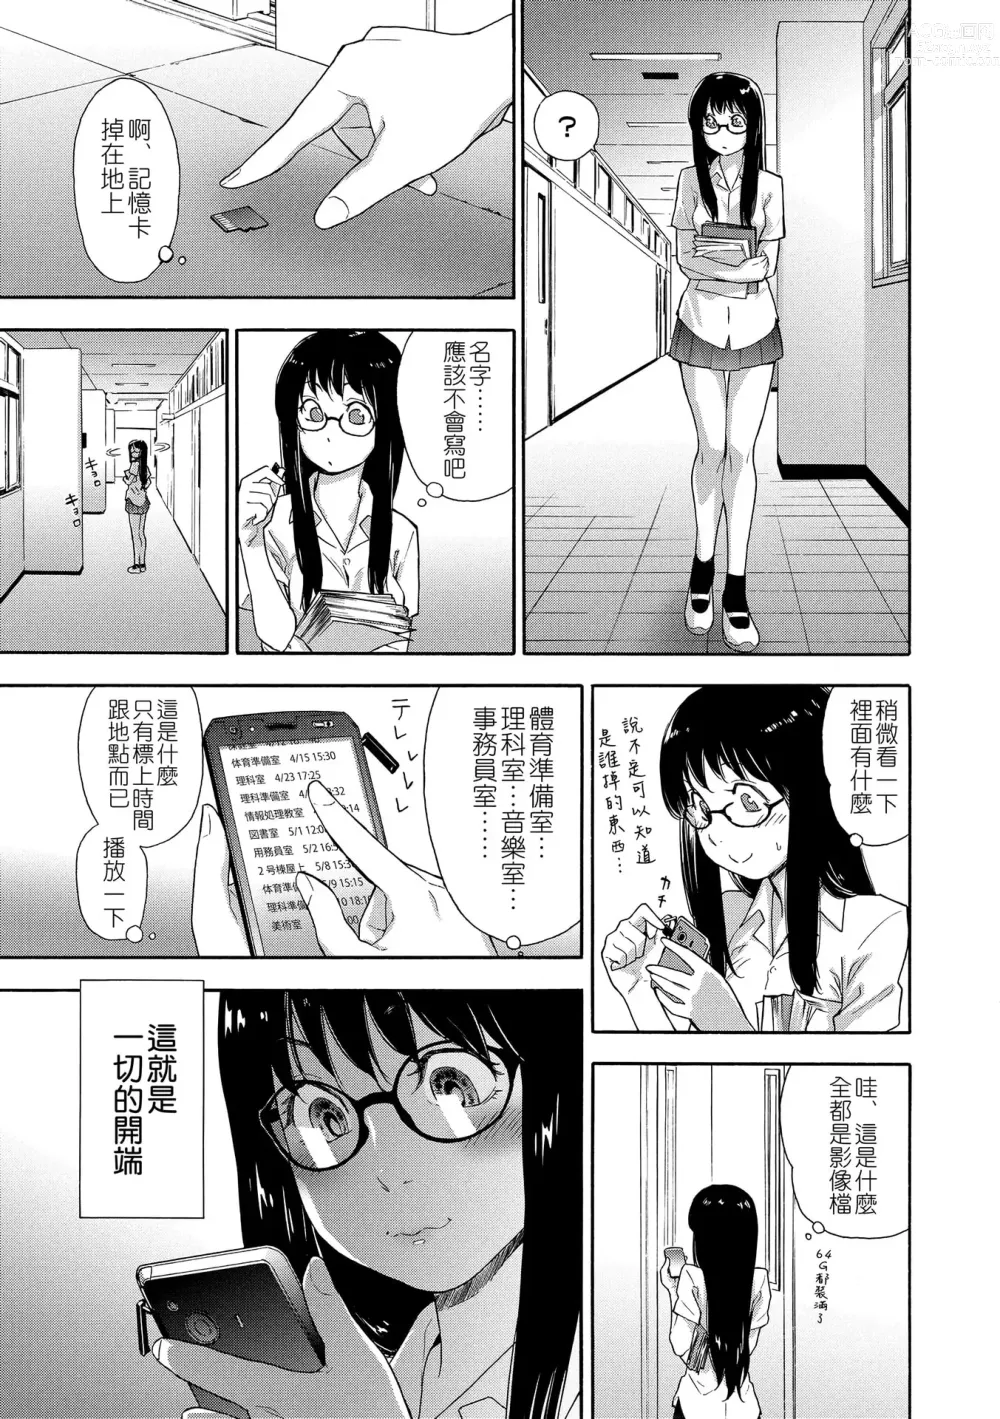 Page 5 of manga 甜美香濃的香草精華 (uncensored)